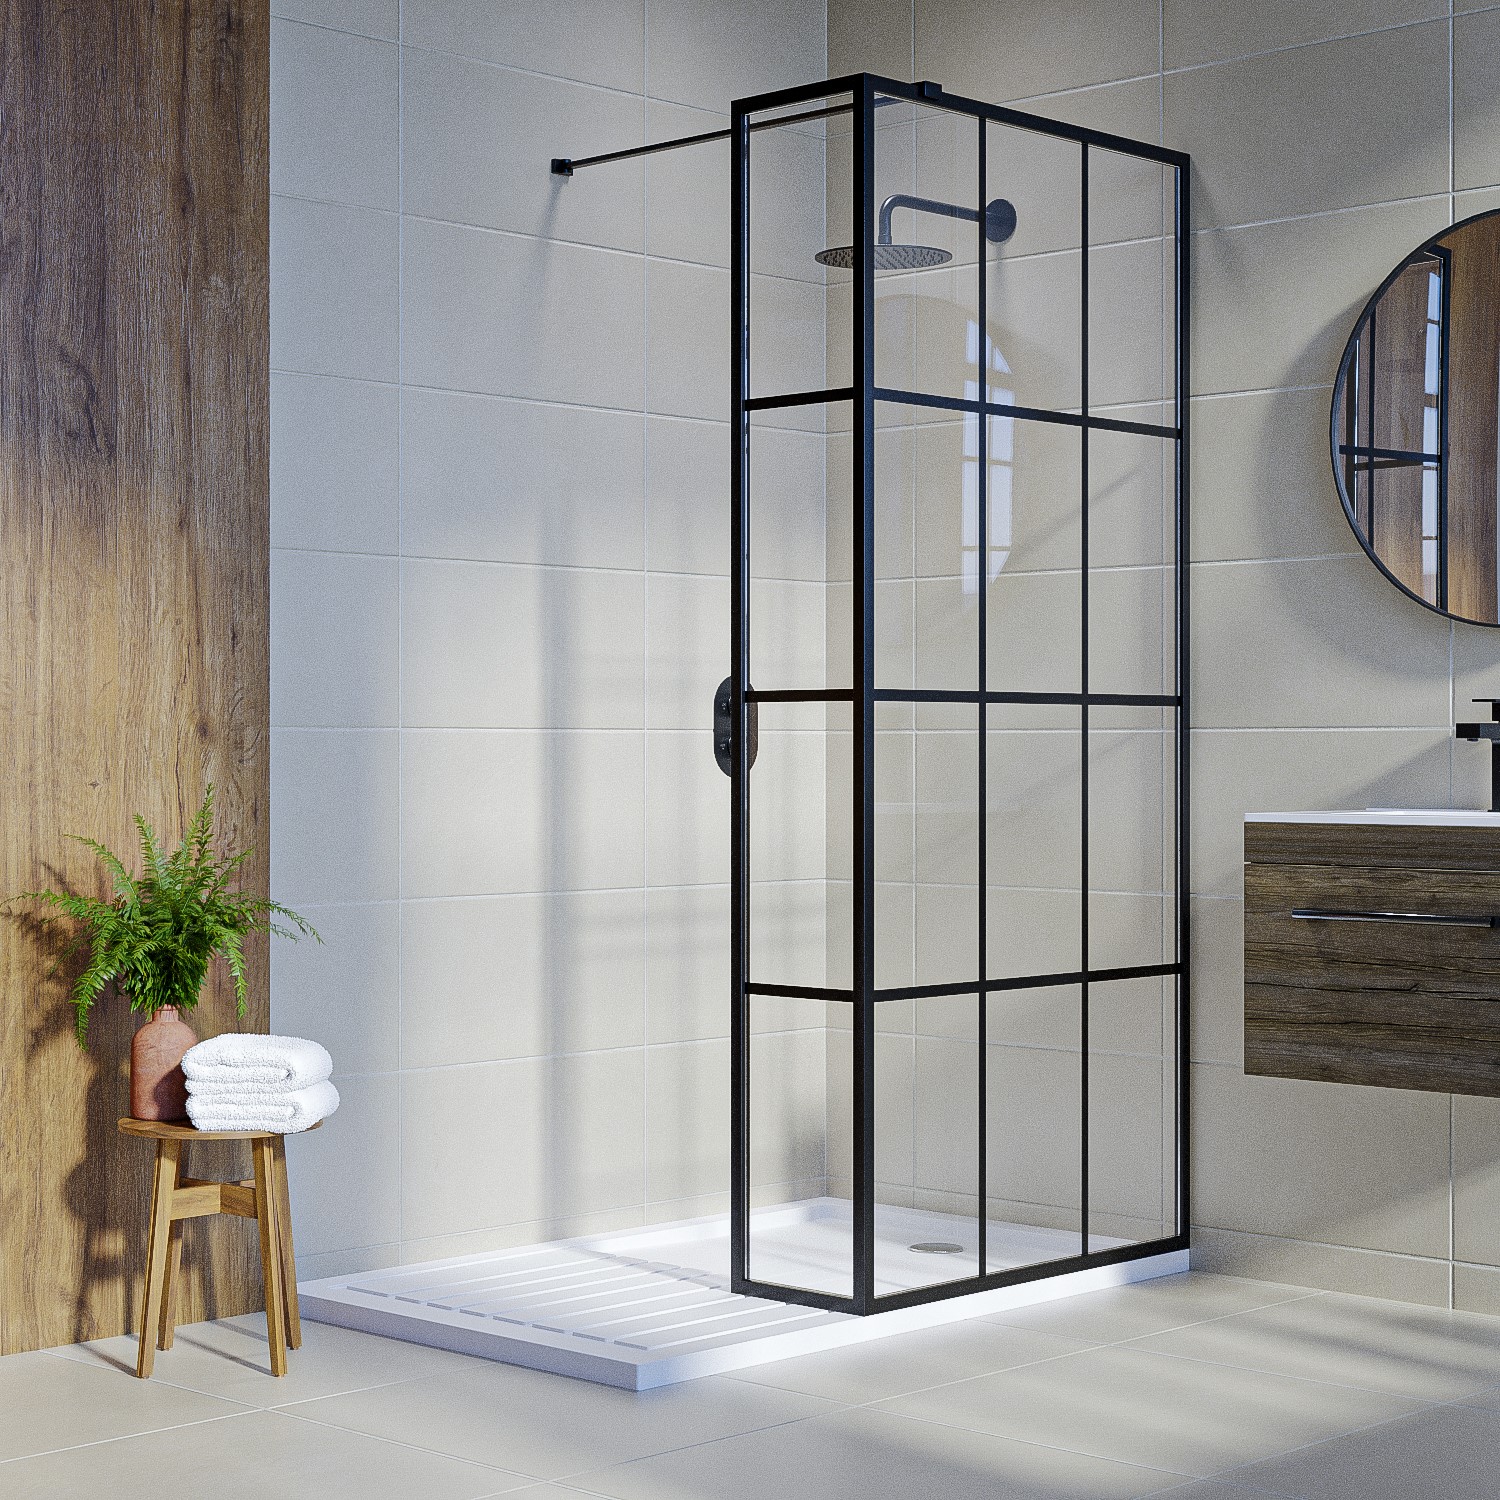 Black 1100mm Grid Wet Room Shower Screen with Wall Support Bar & Return Panel - Nova